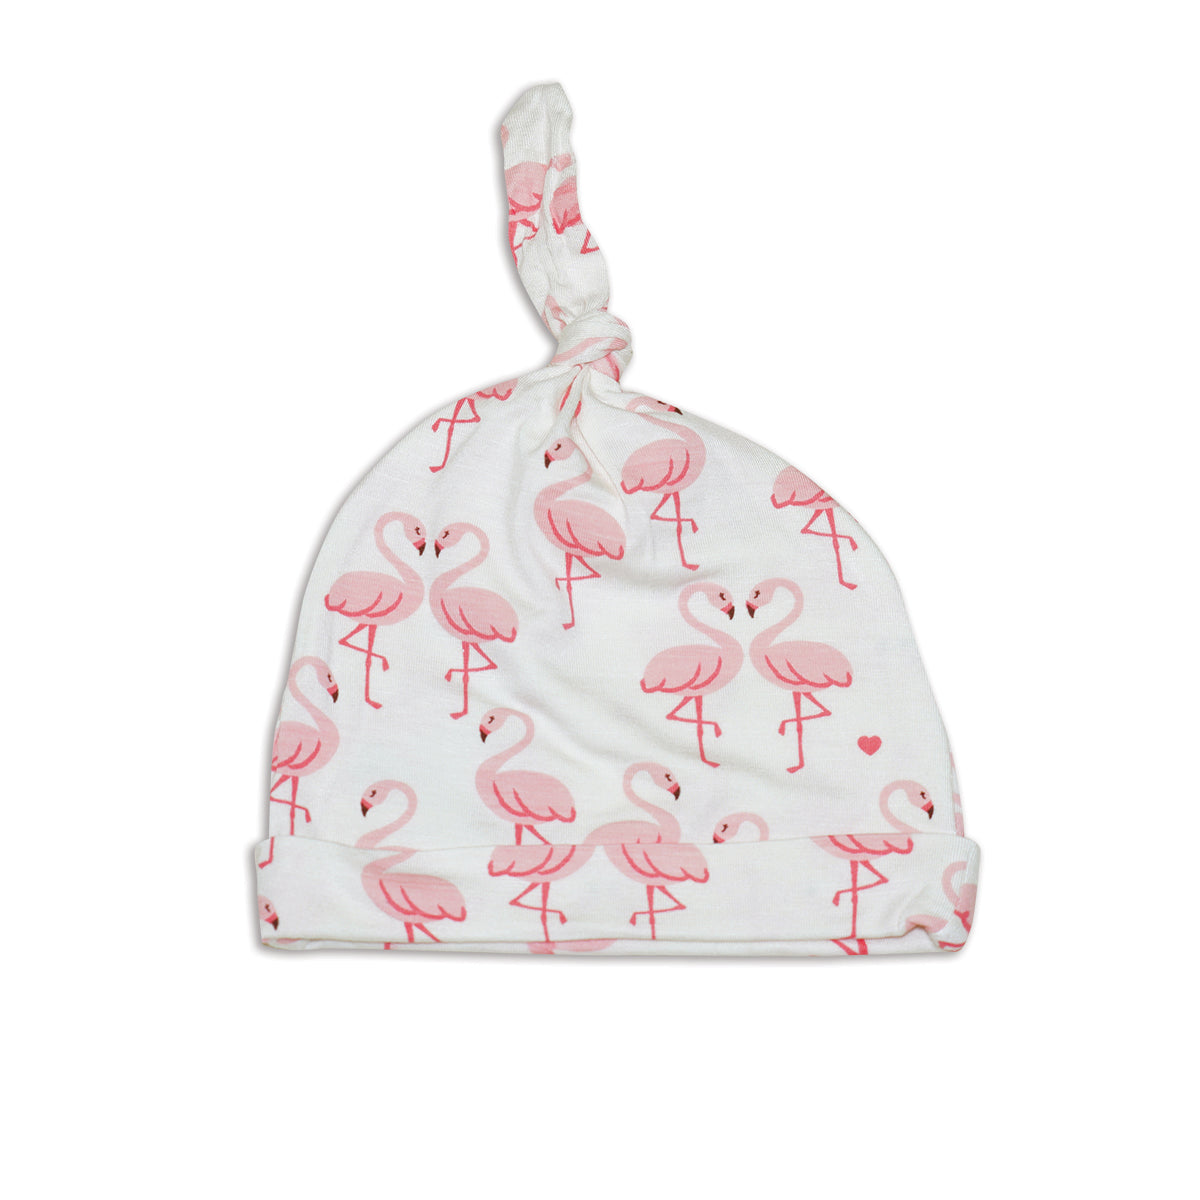 Silkberry Baby Knot Hat - Flamingo Love Print